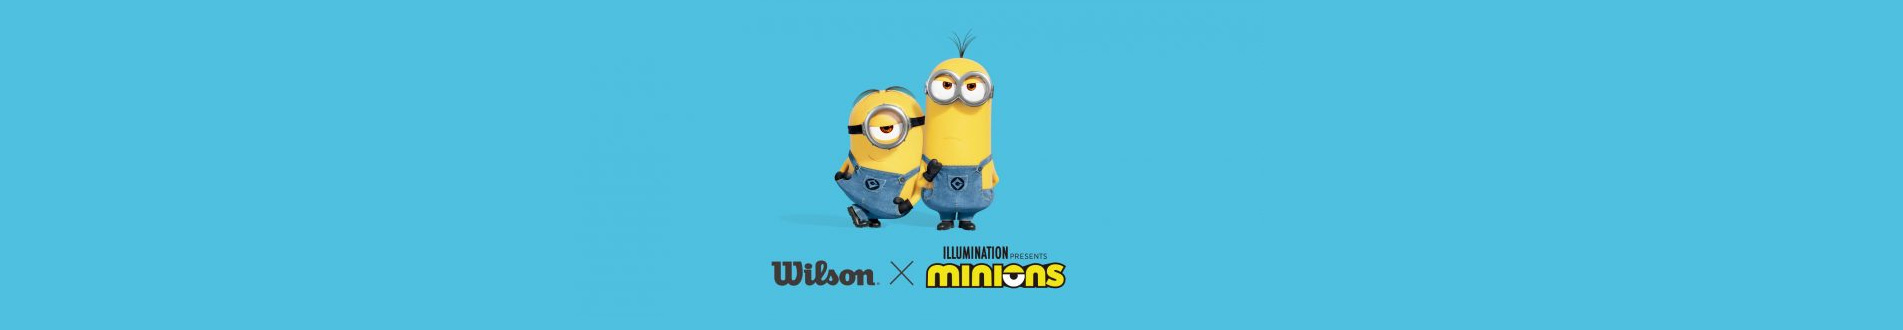 WILSON X MINIONS